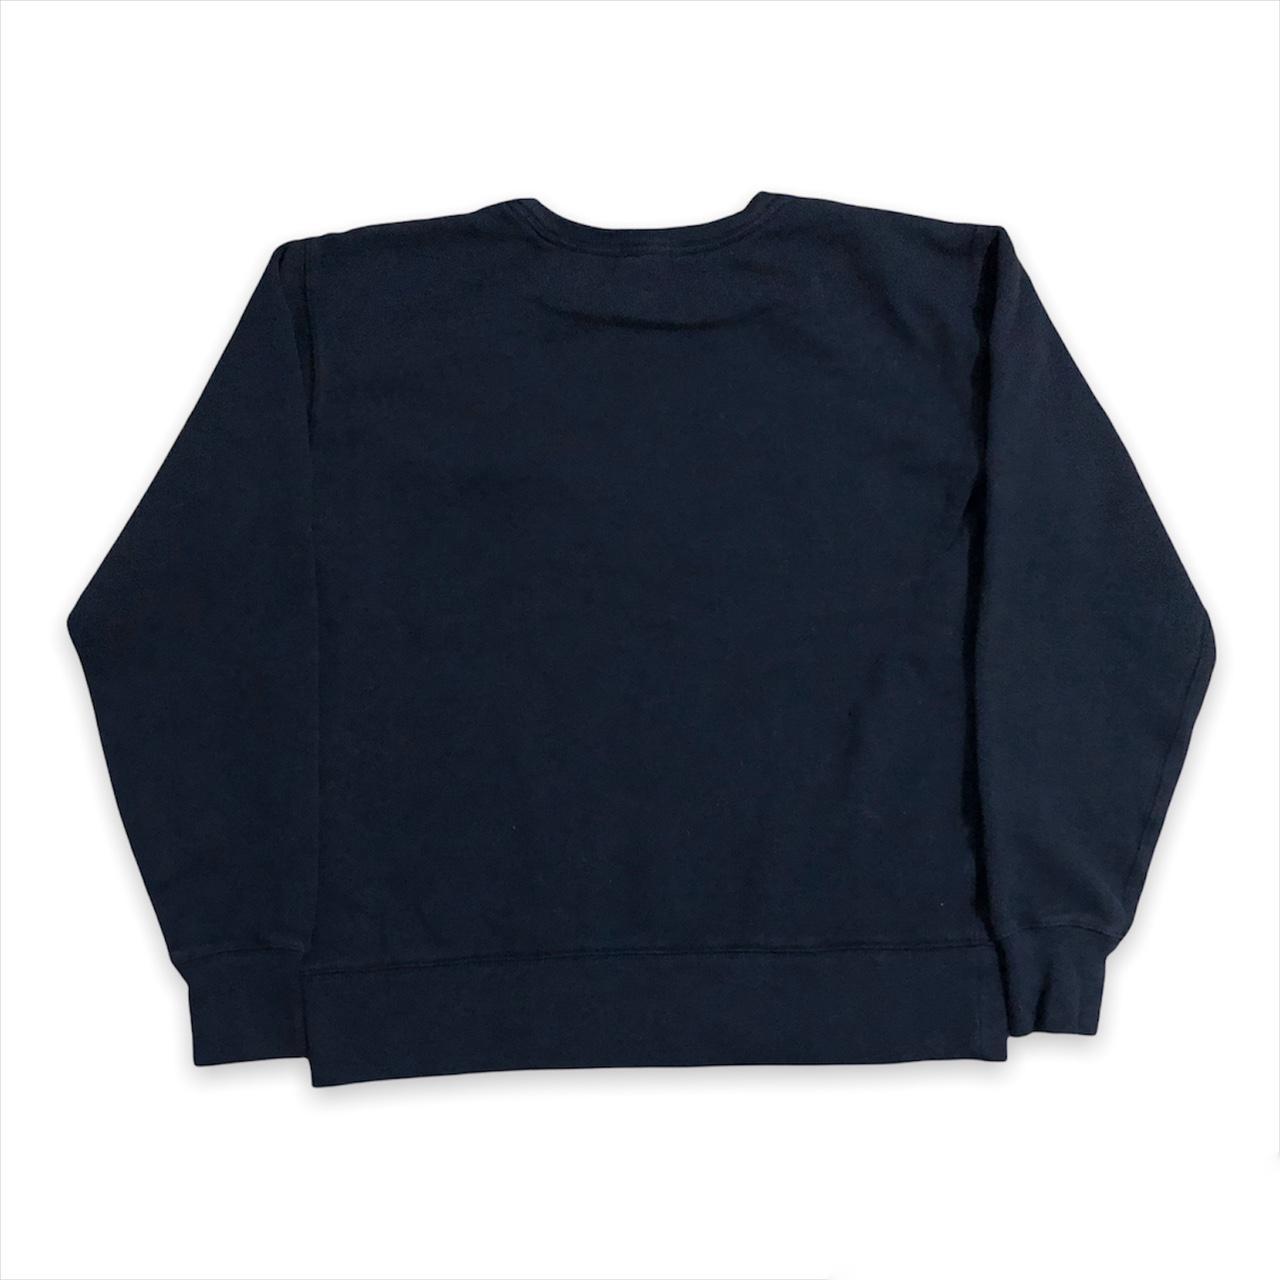 Product Image 2 - Womens jumper / Sweatshirt. 

Made